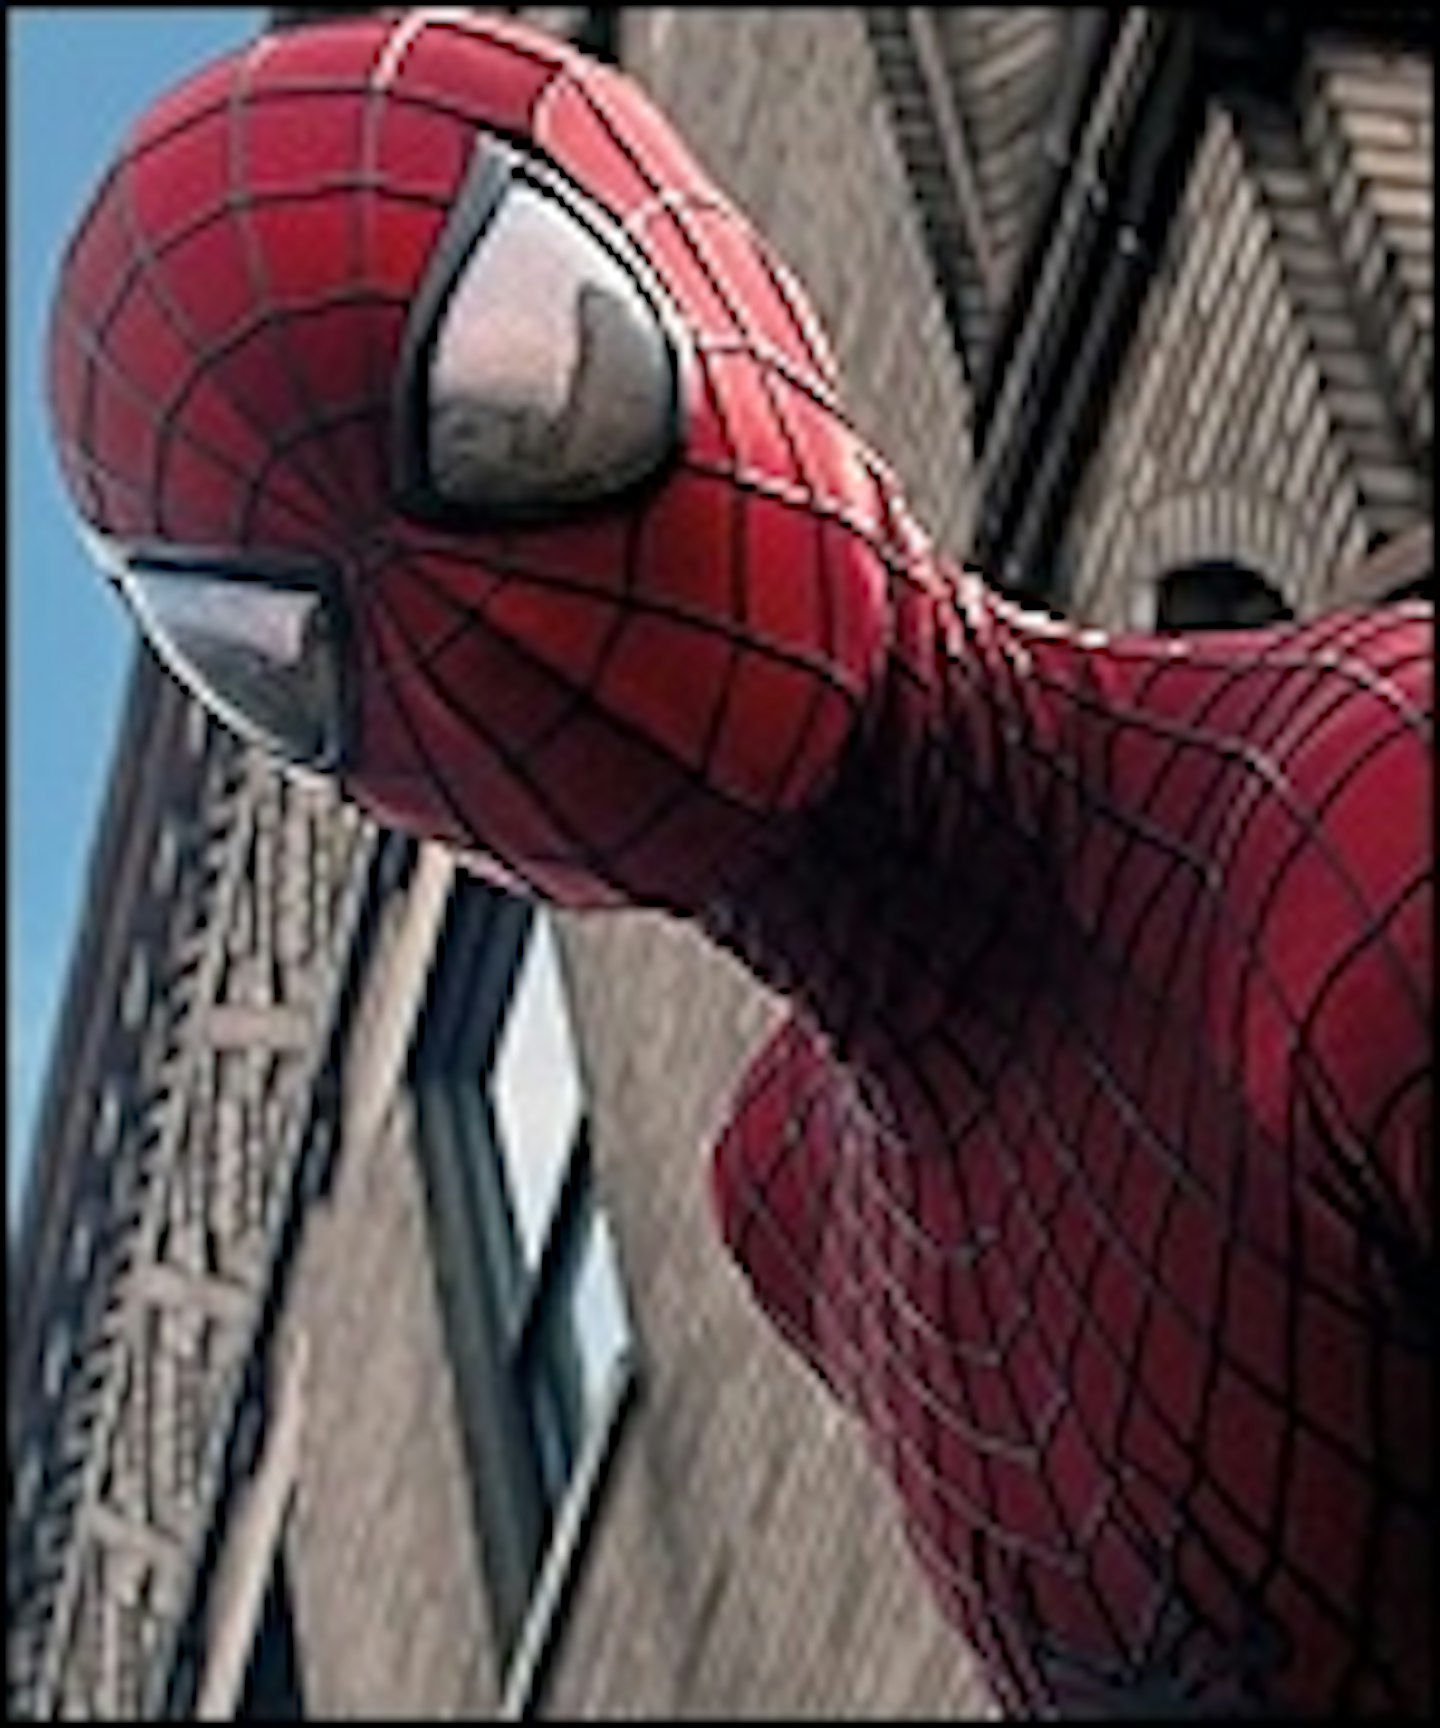 Amazing Spider-Man 2 Featurettes Go Behind The Scenes